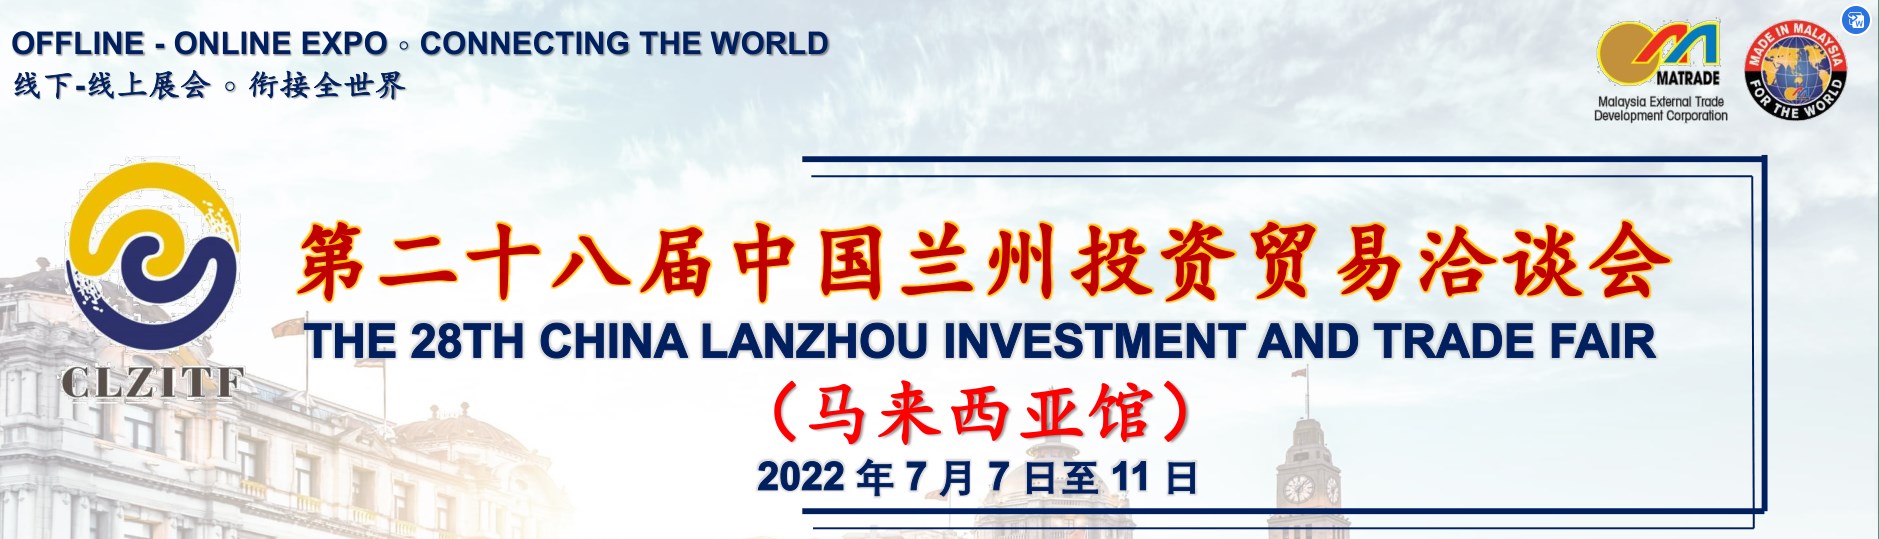 De 28e China Lanzhou investerings- en handelsbeurs